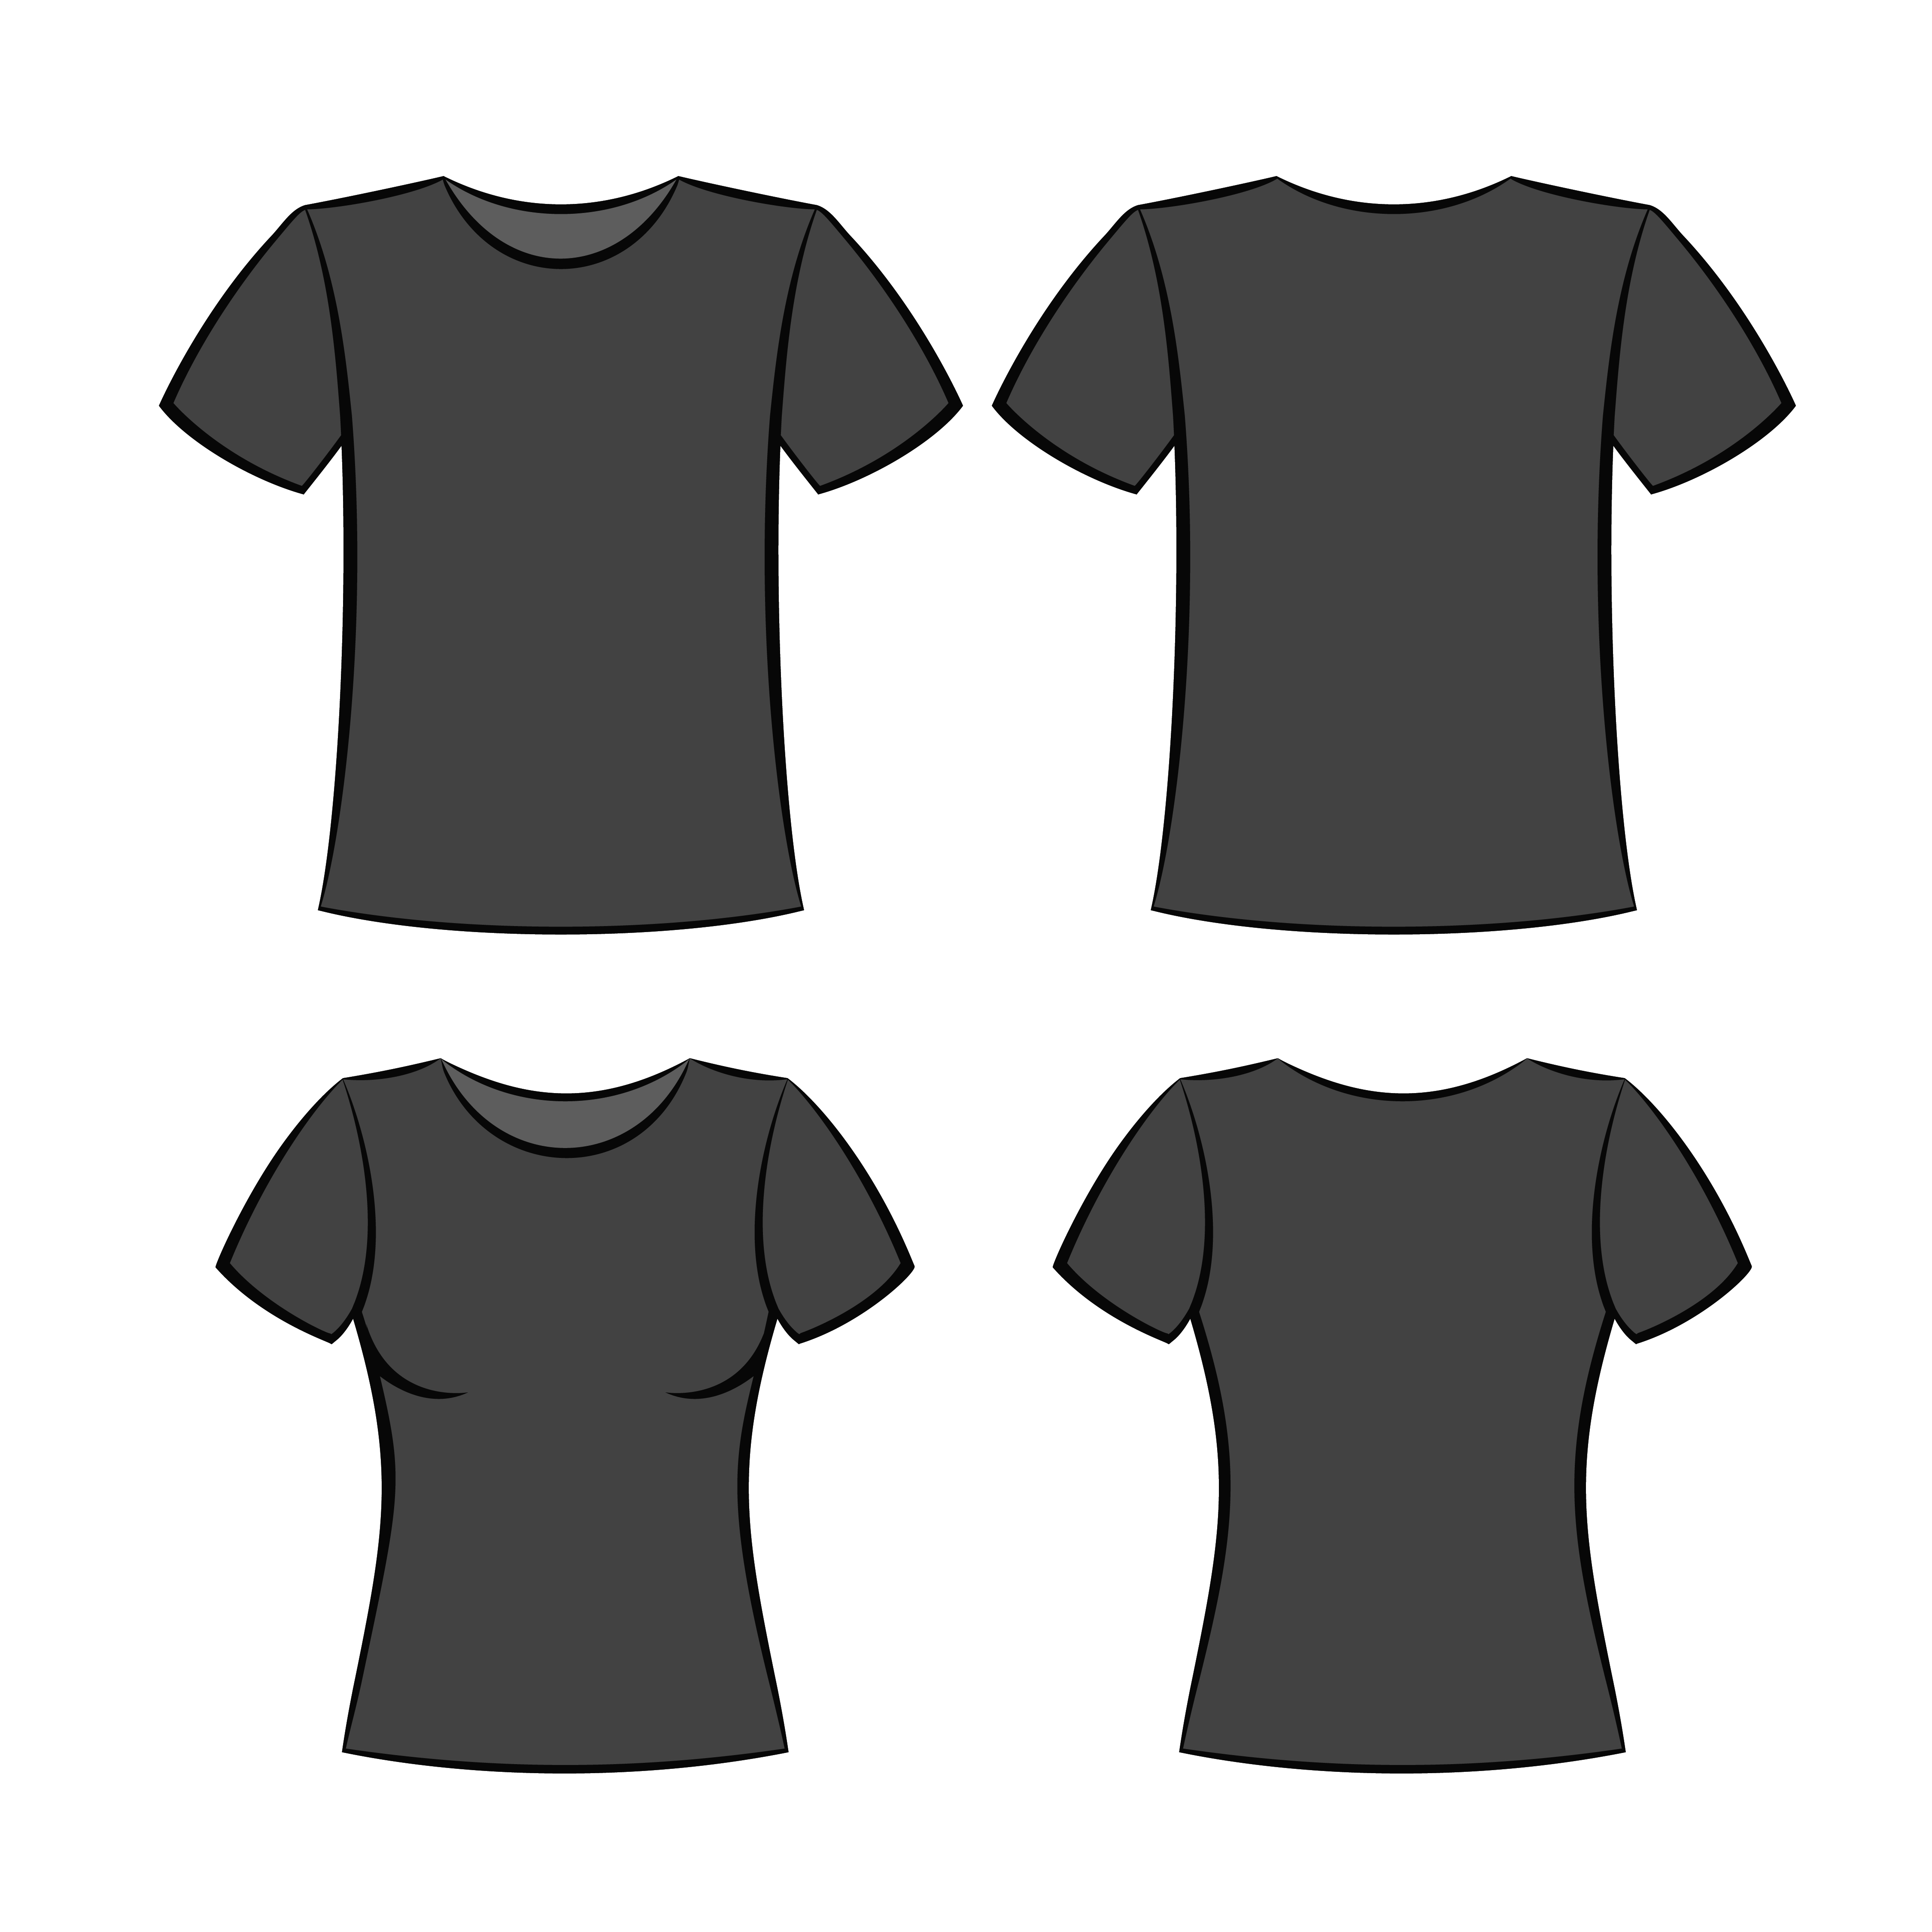 black-t-shirt-design-template-royalty-free-vector-image